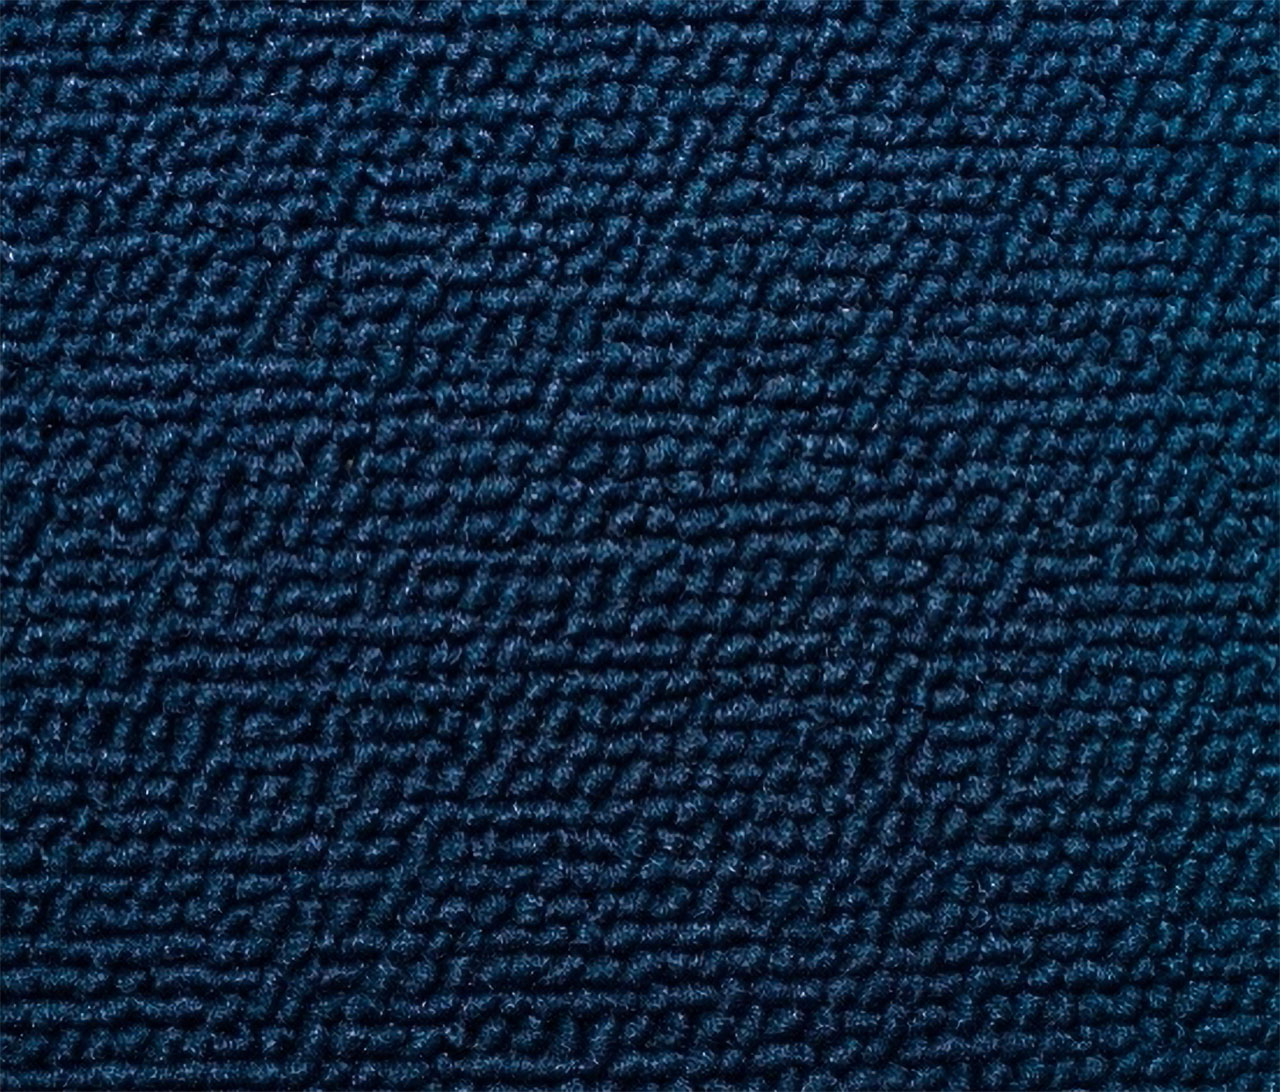 Holden Standard EJ Standard Panel Van B60 Columbine Blue Carpet (Image 1 of 1)